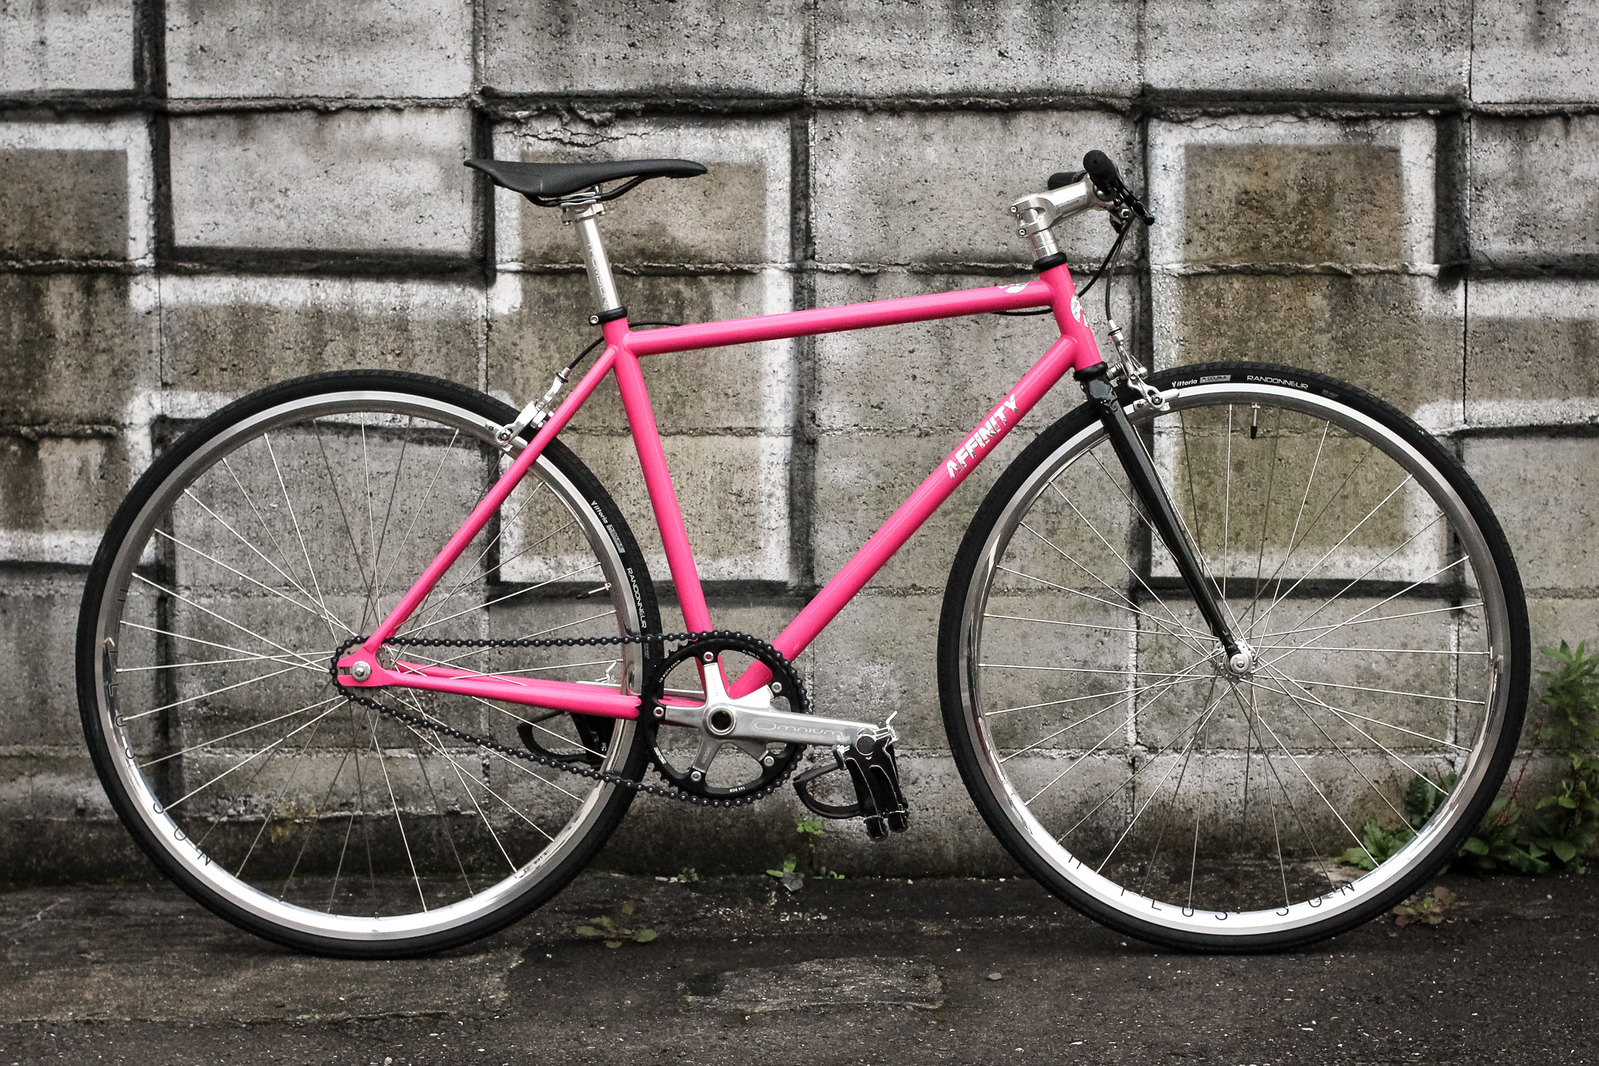 *AFFINITY CYCLES* metropolitan complete bike